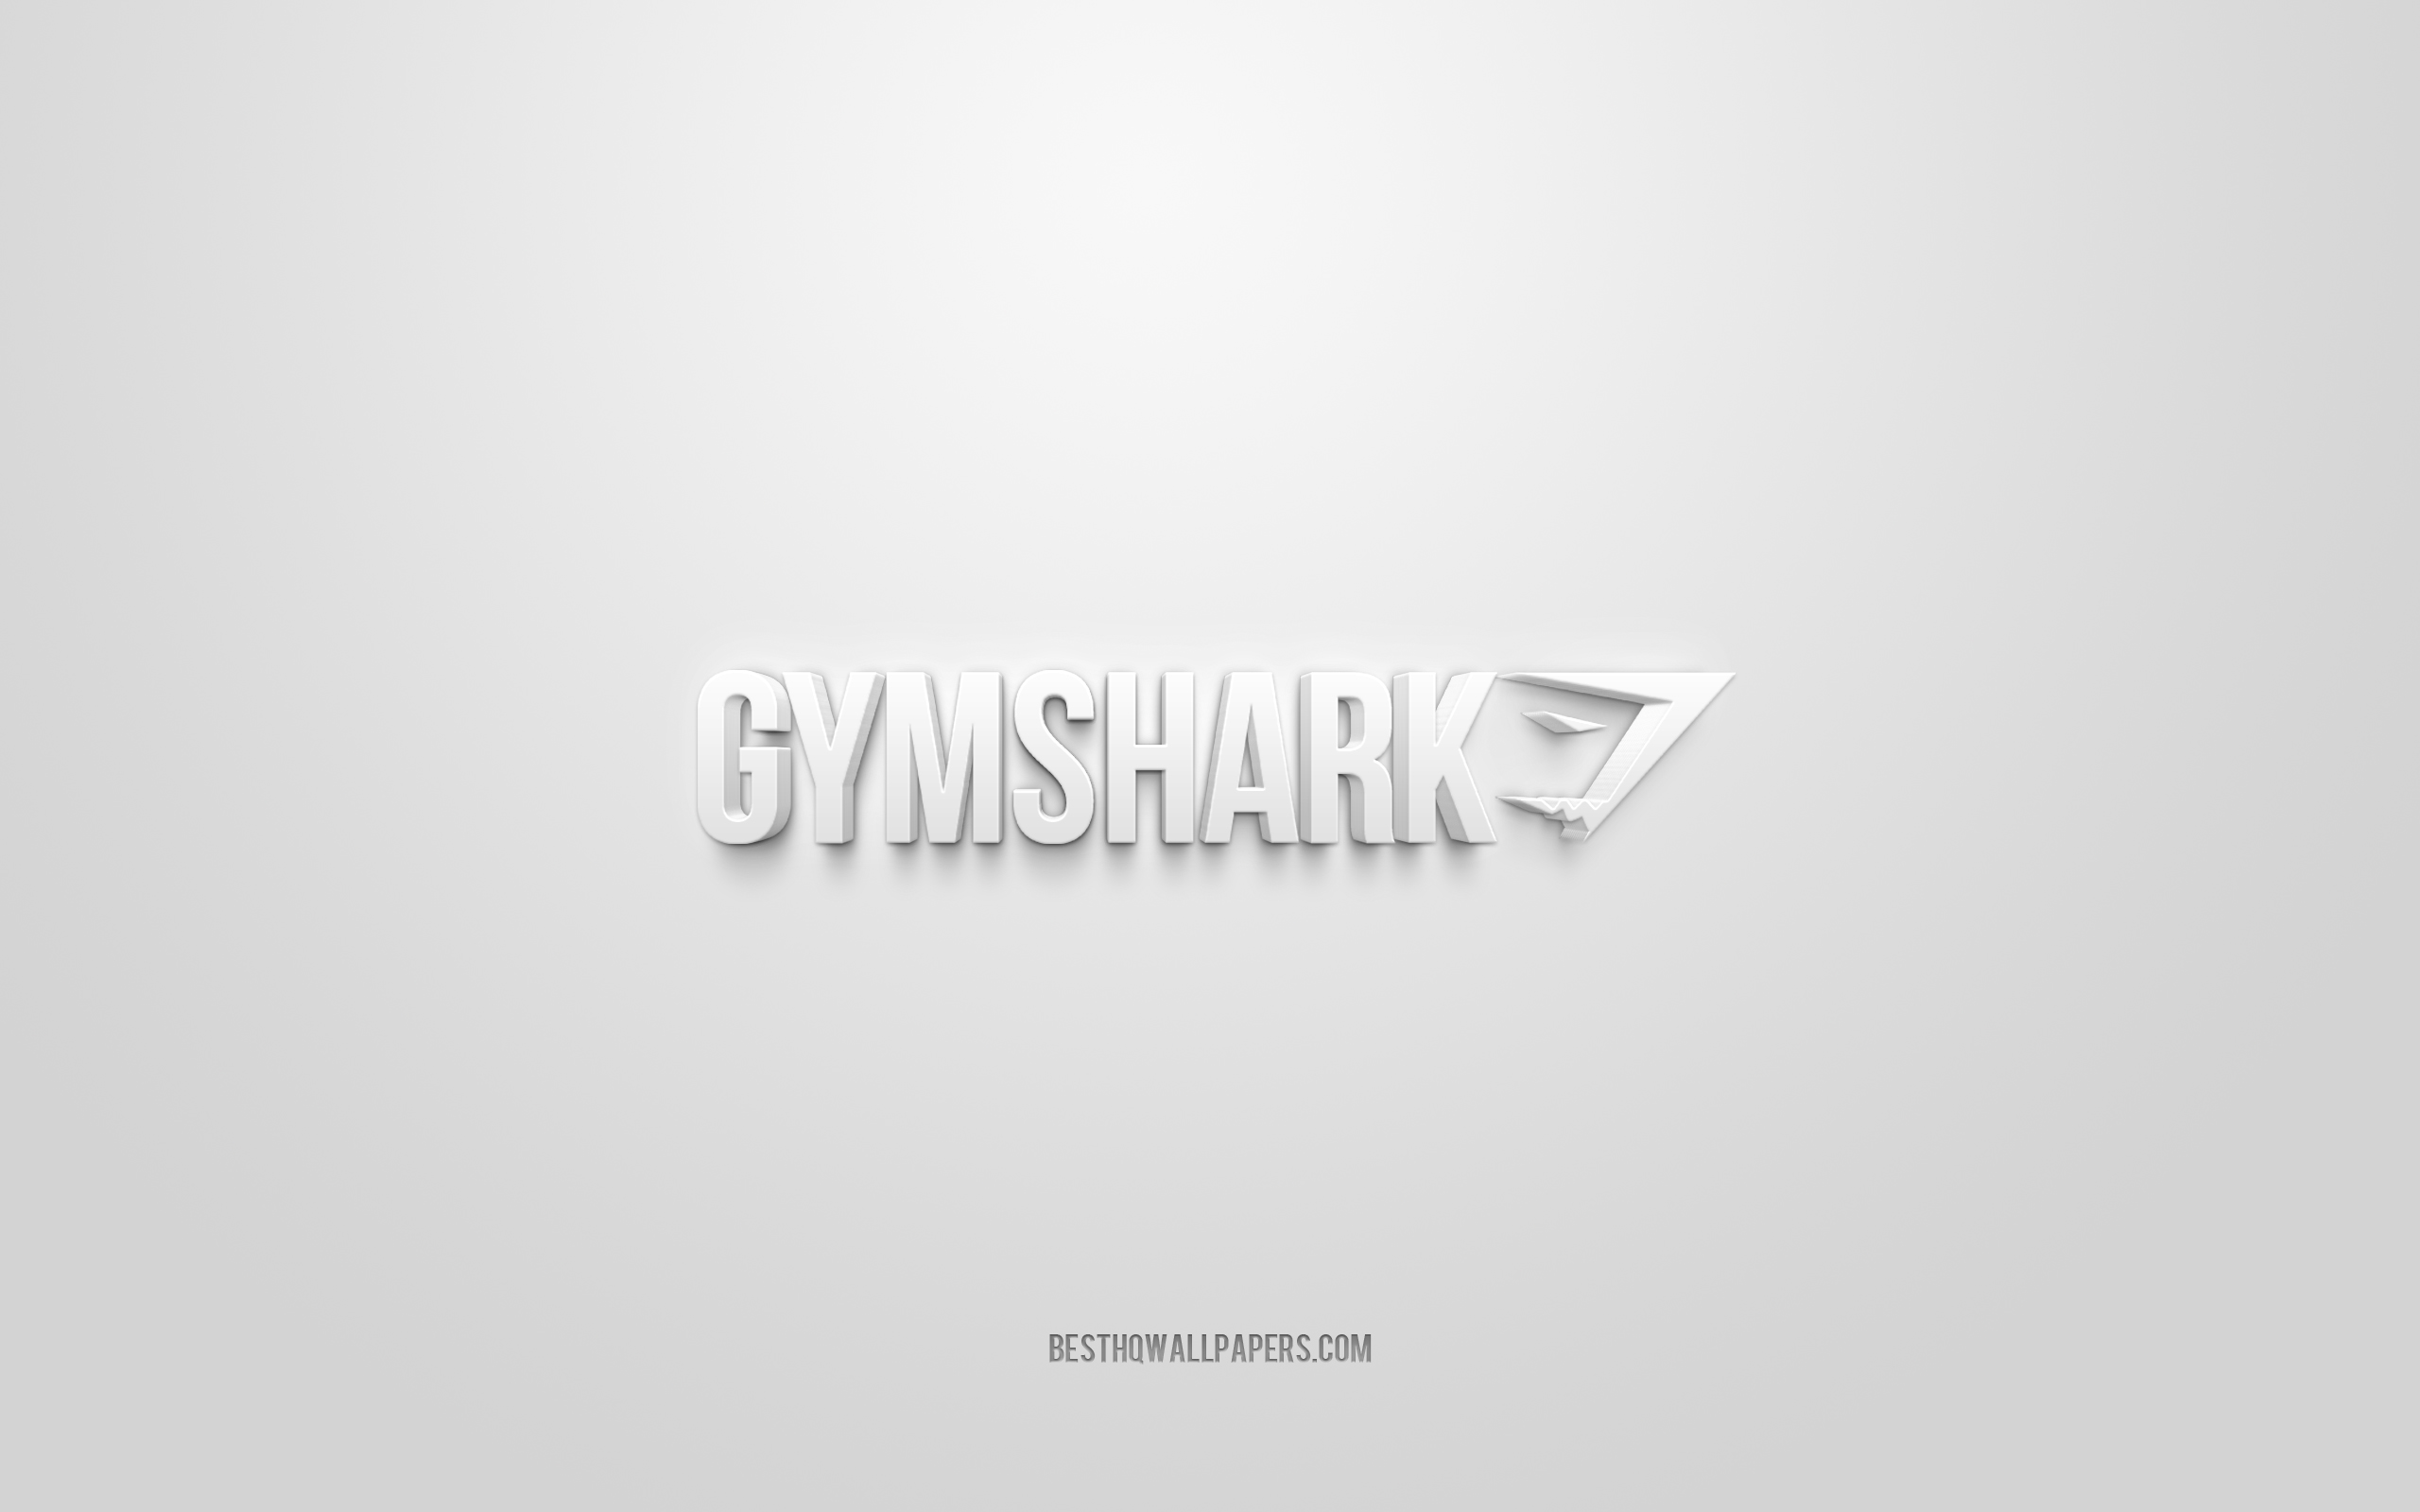 Gymshark Logo Design by Martin Williams at Pixel Freak Creative